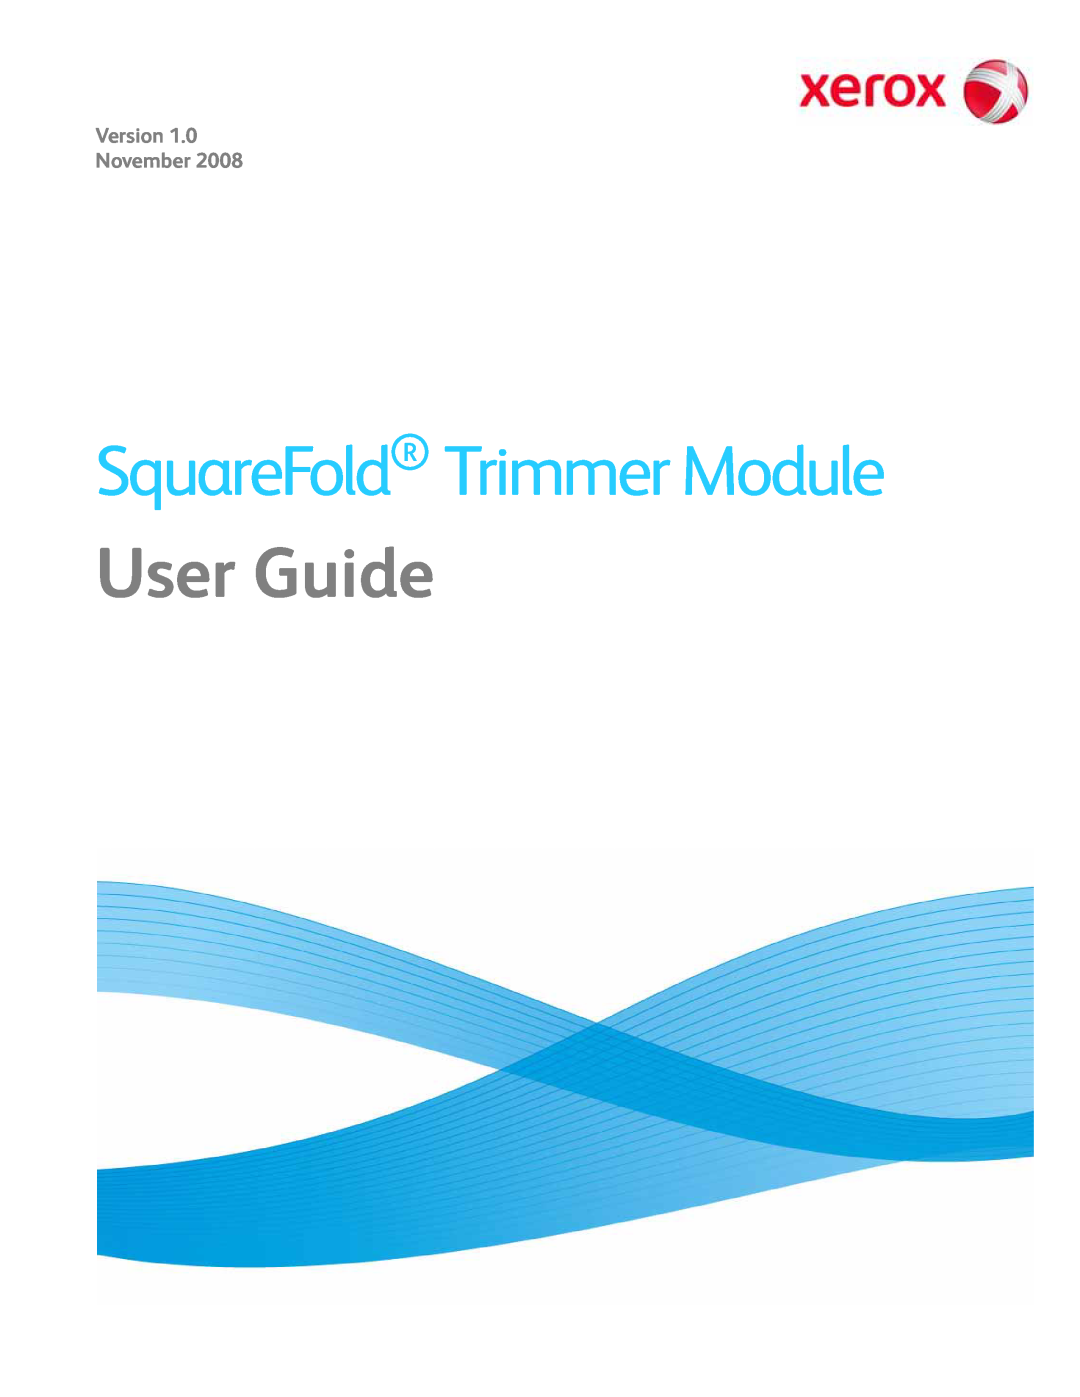 Xerox manual SquareFold Trimmer Module, User Guide, Version November 